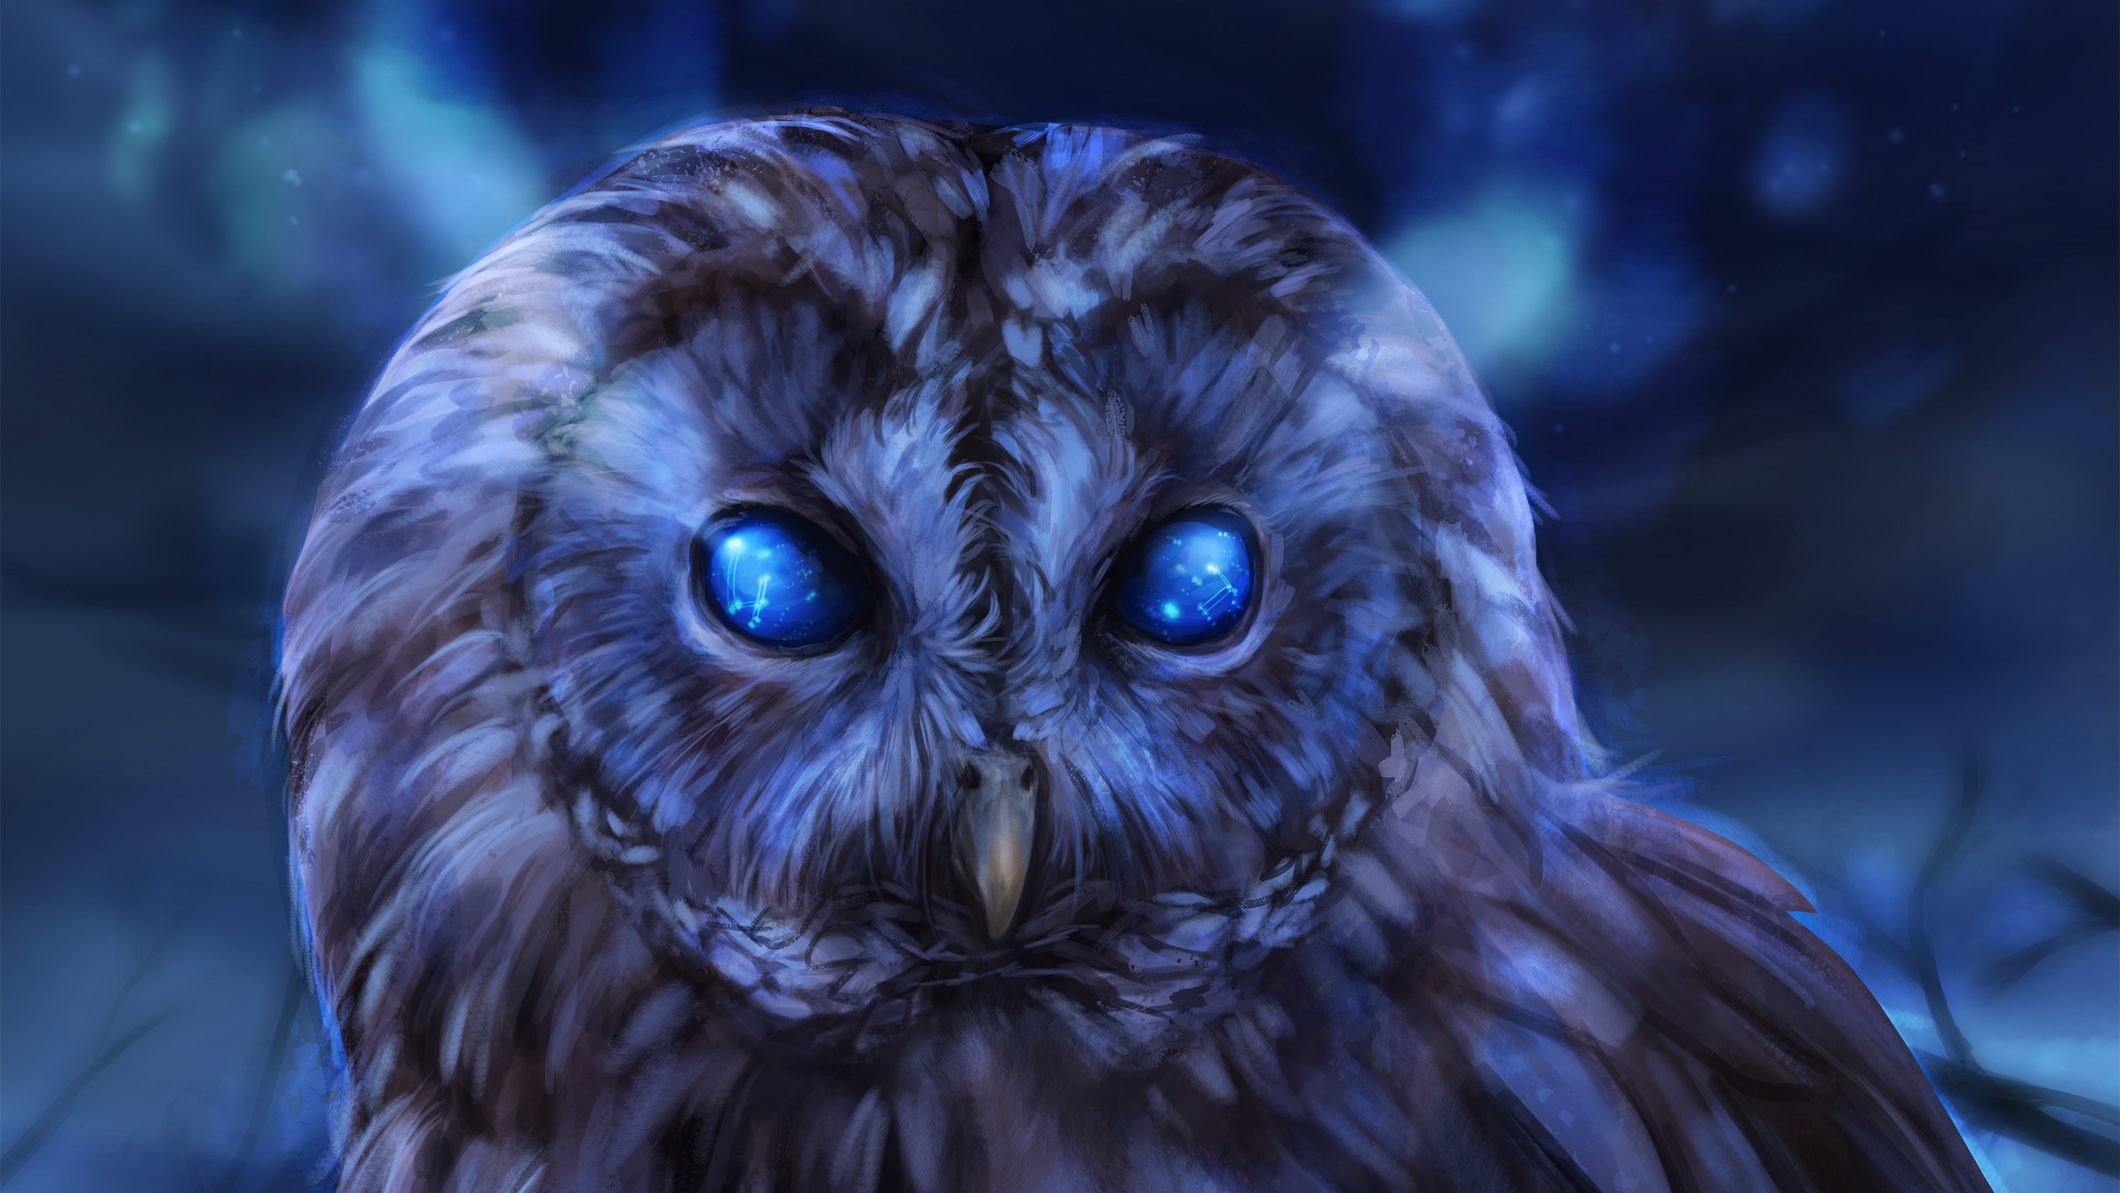 Blue Hair Owl Digital Art - wide 7